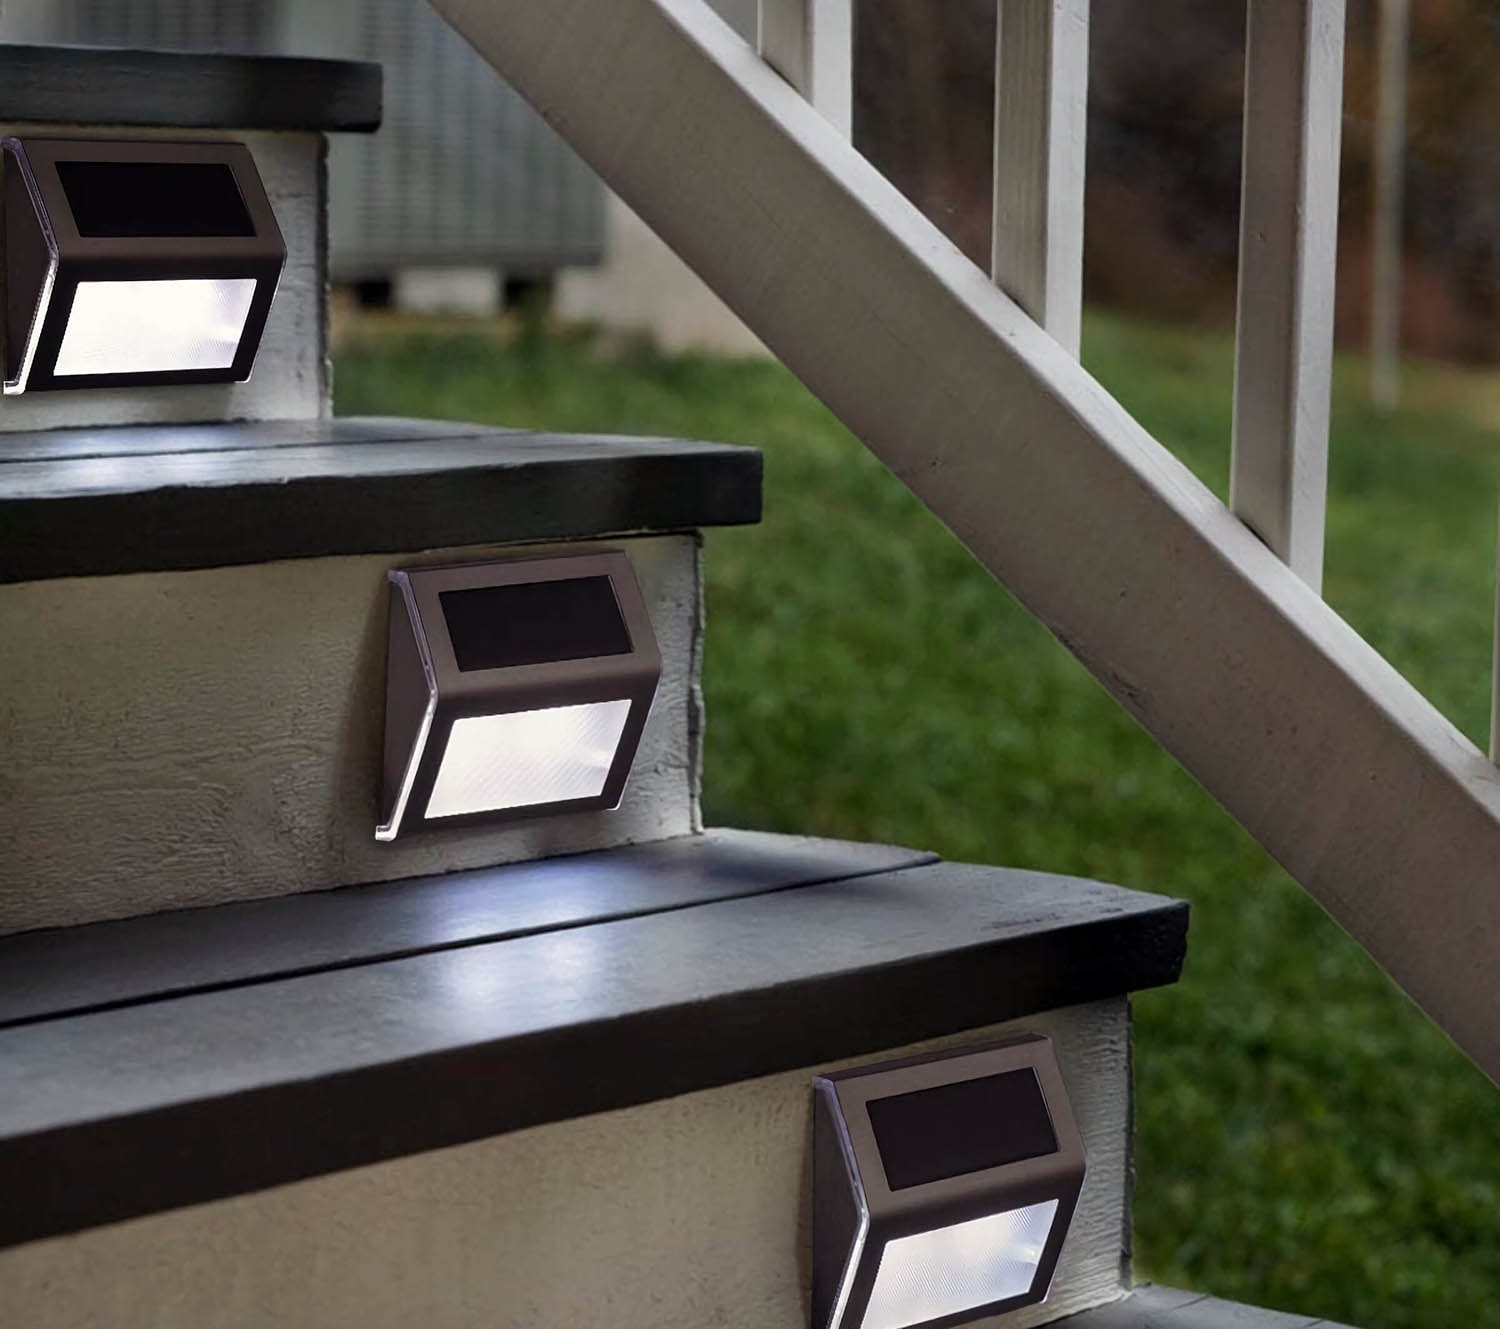 6 LED Solar Power Auto Wall Light Outdoor Waterproof Garden Driveway Step Lamp 